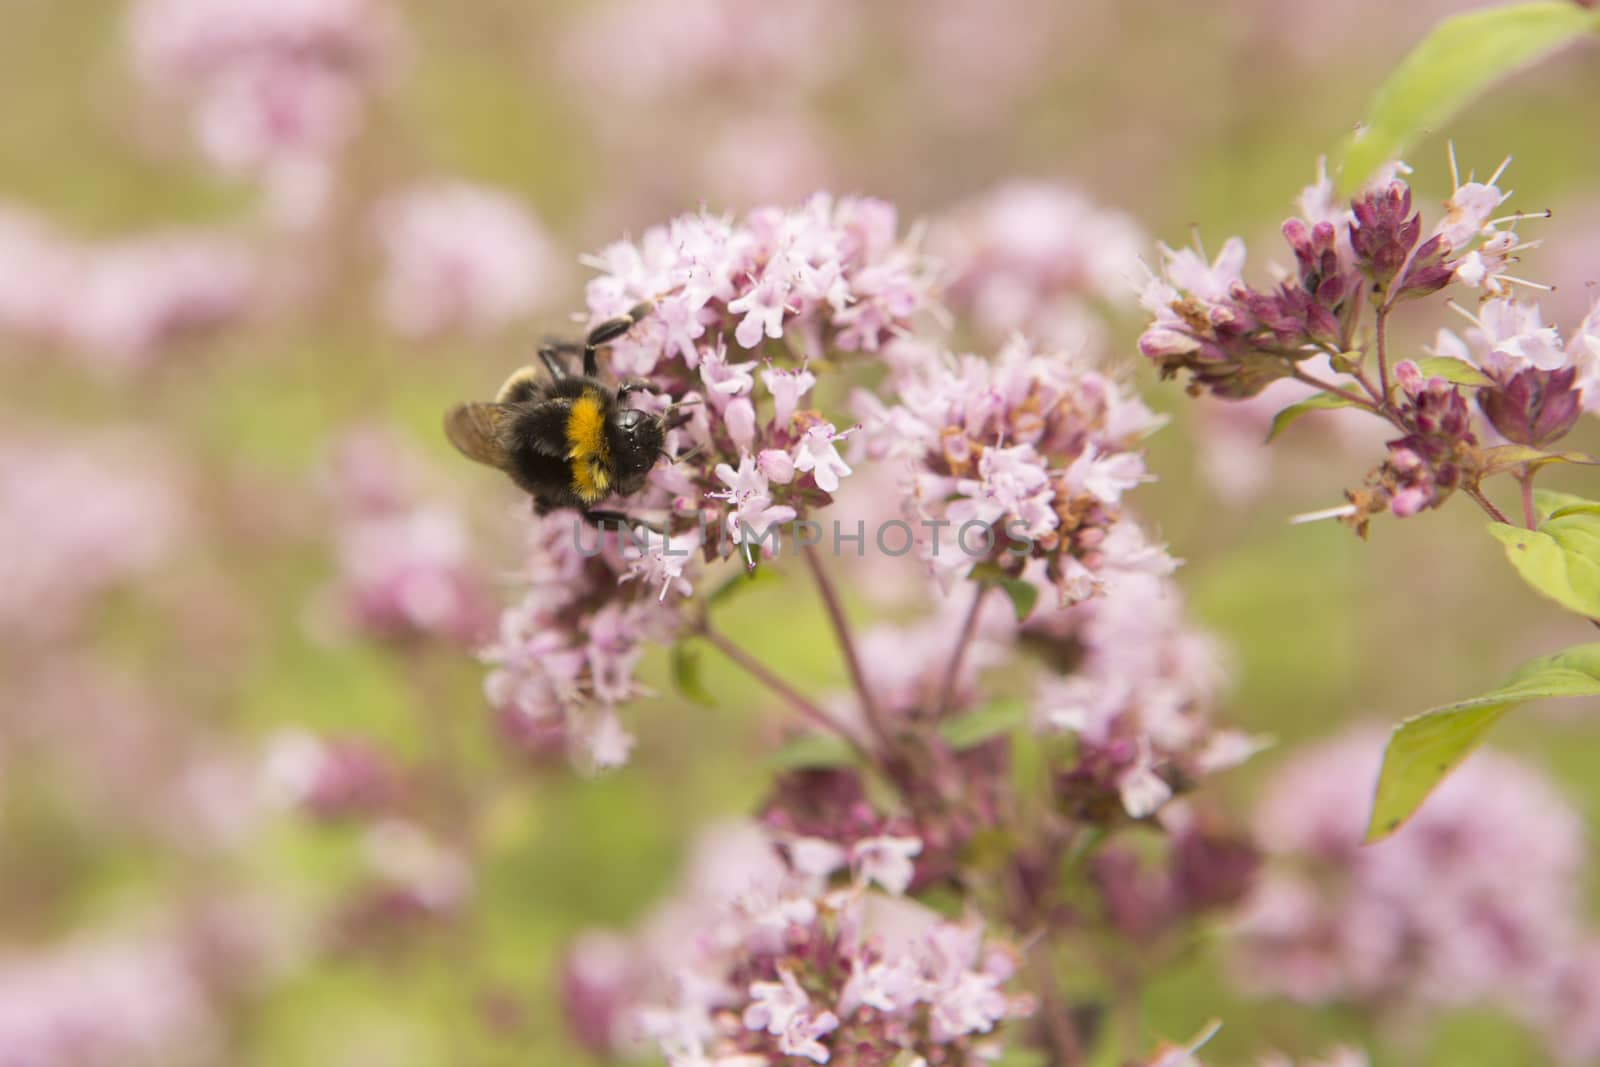 Bee on purple plant harvesting pollen